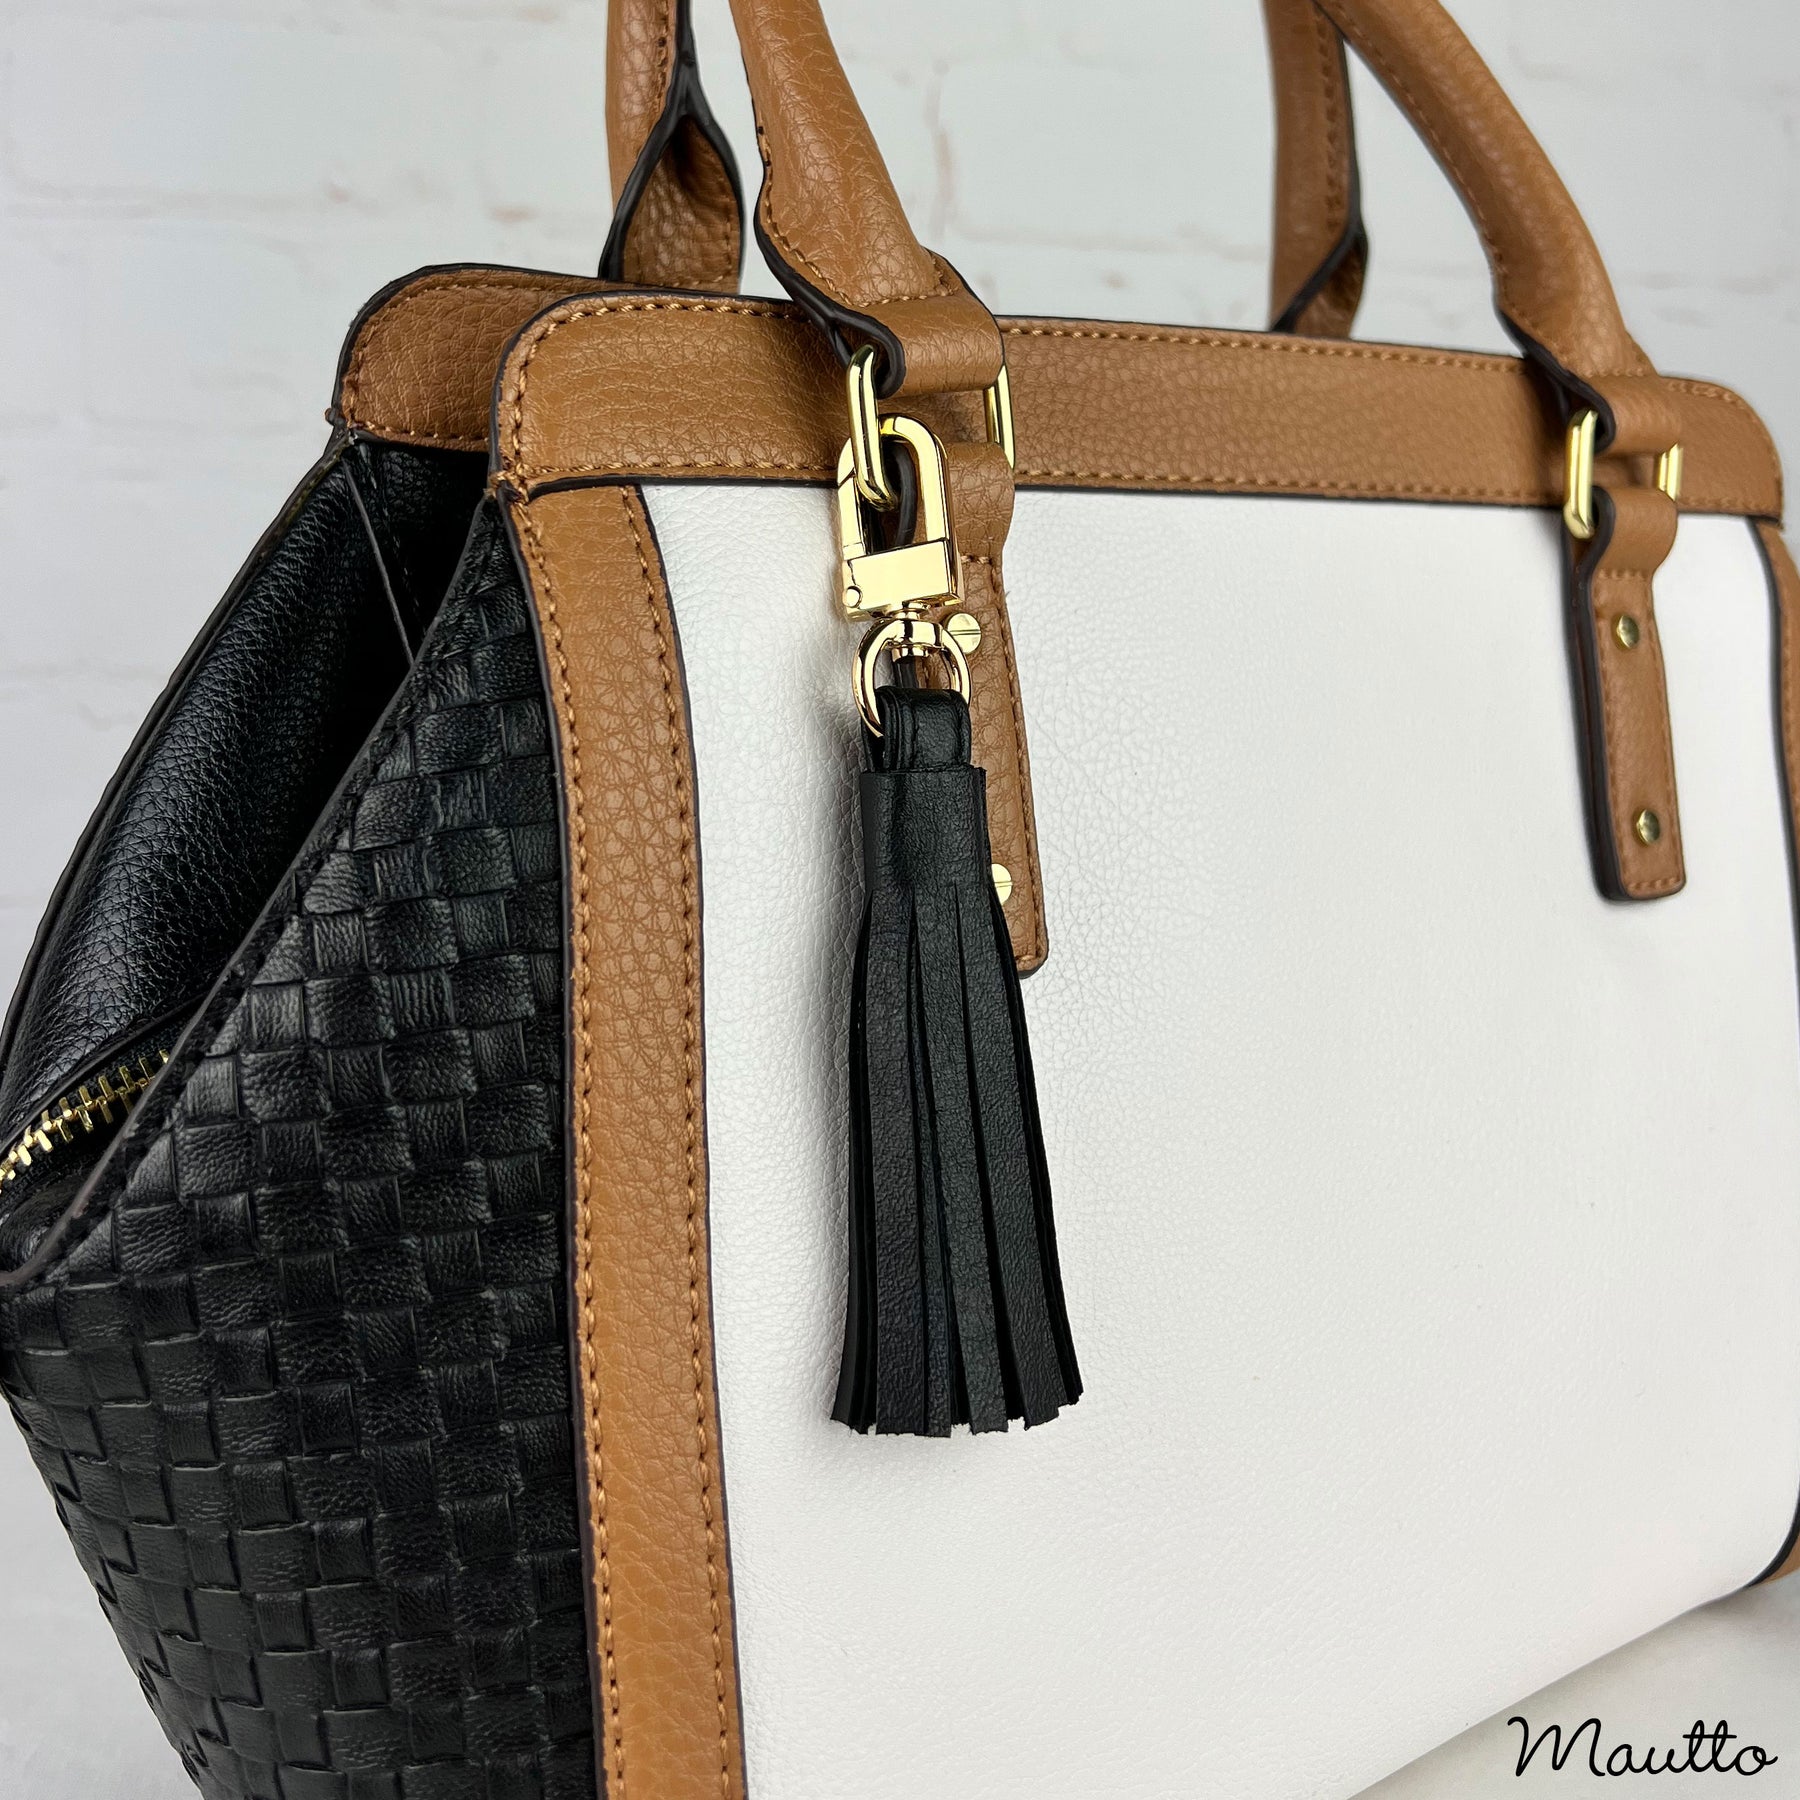 Tassel leather bag charm